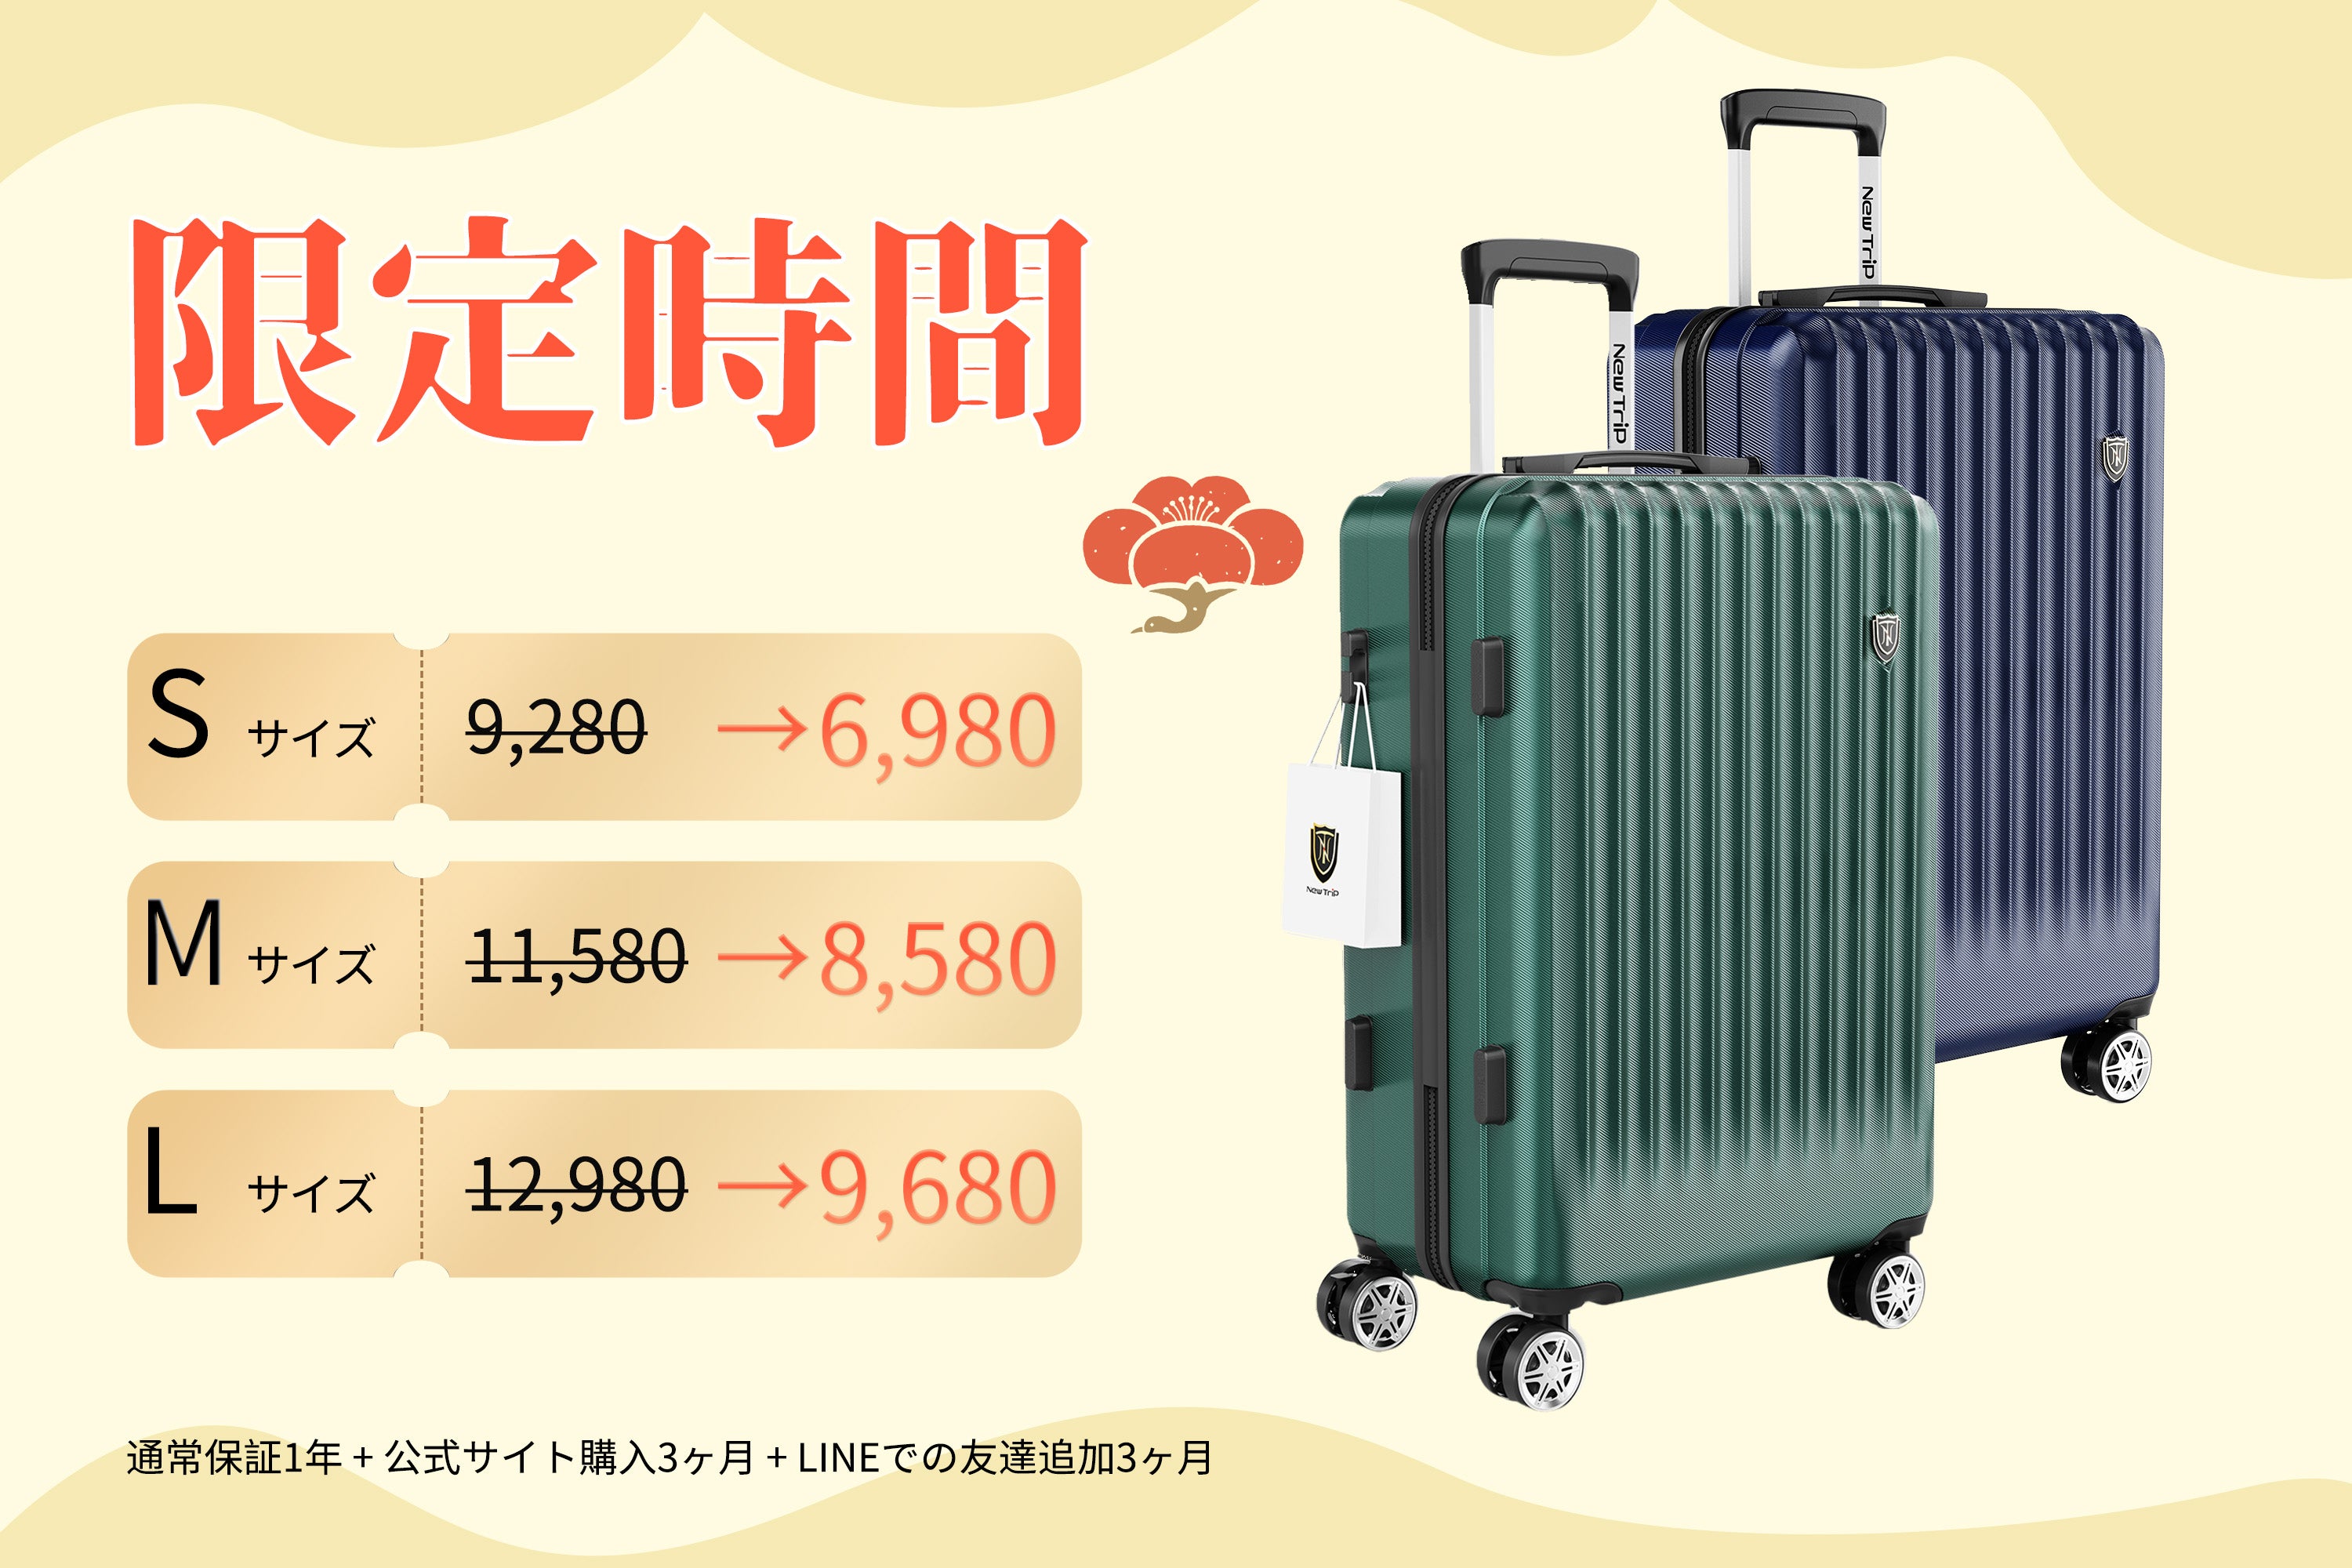 New Tripスーツケース 公式オンラインショップ